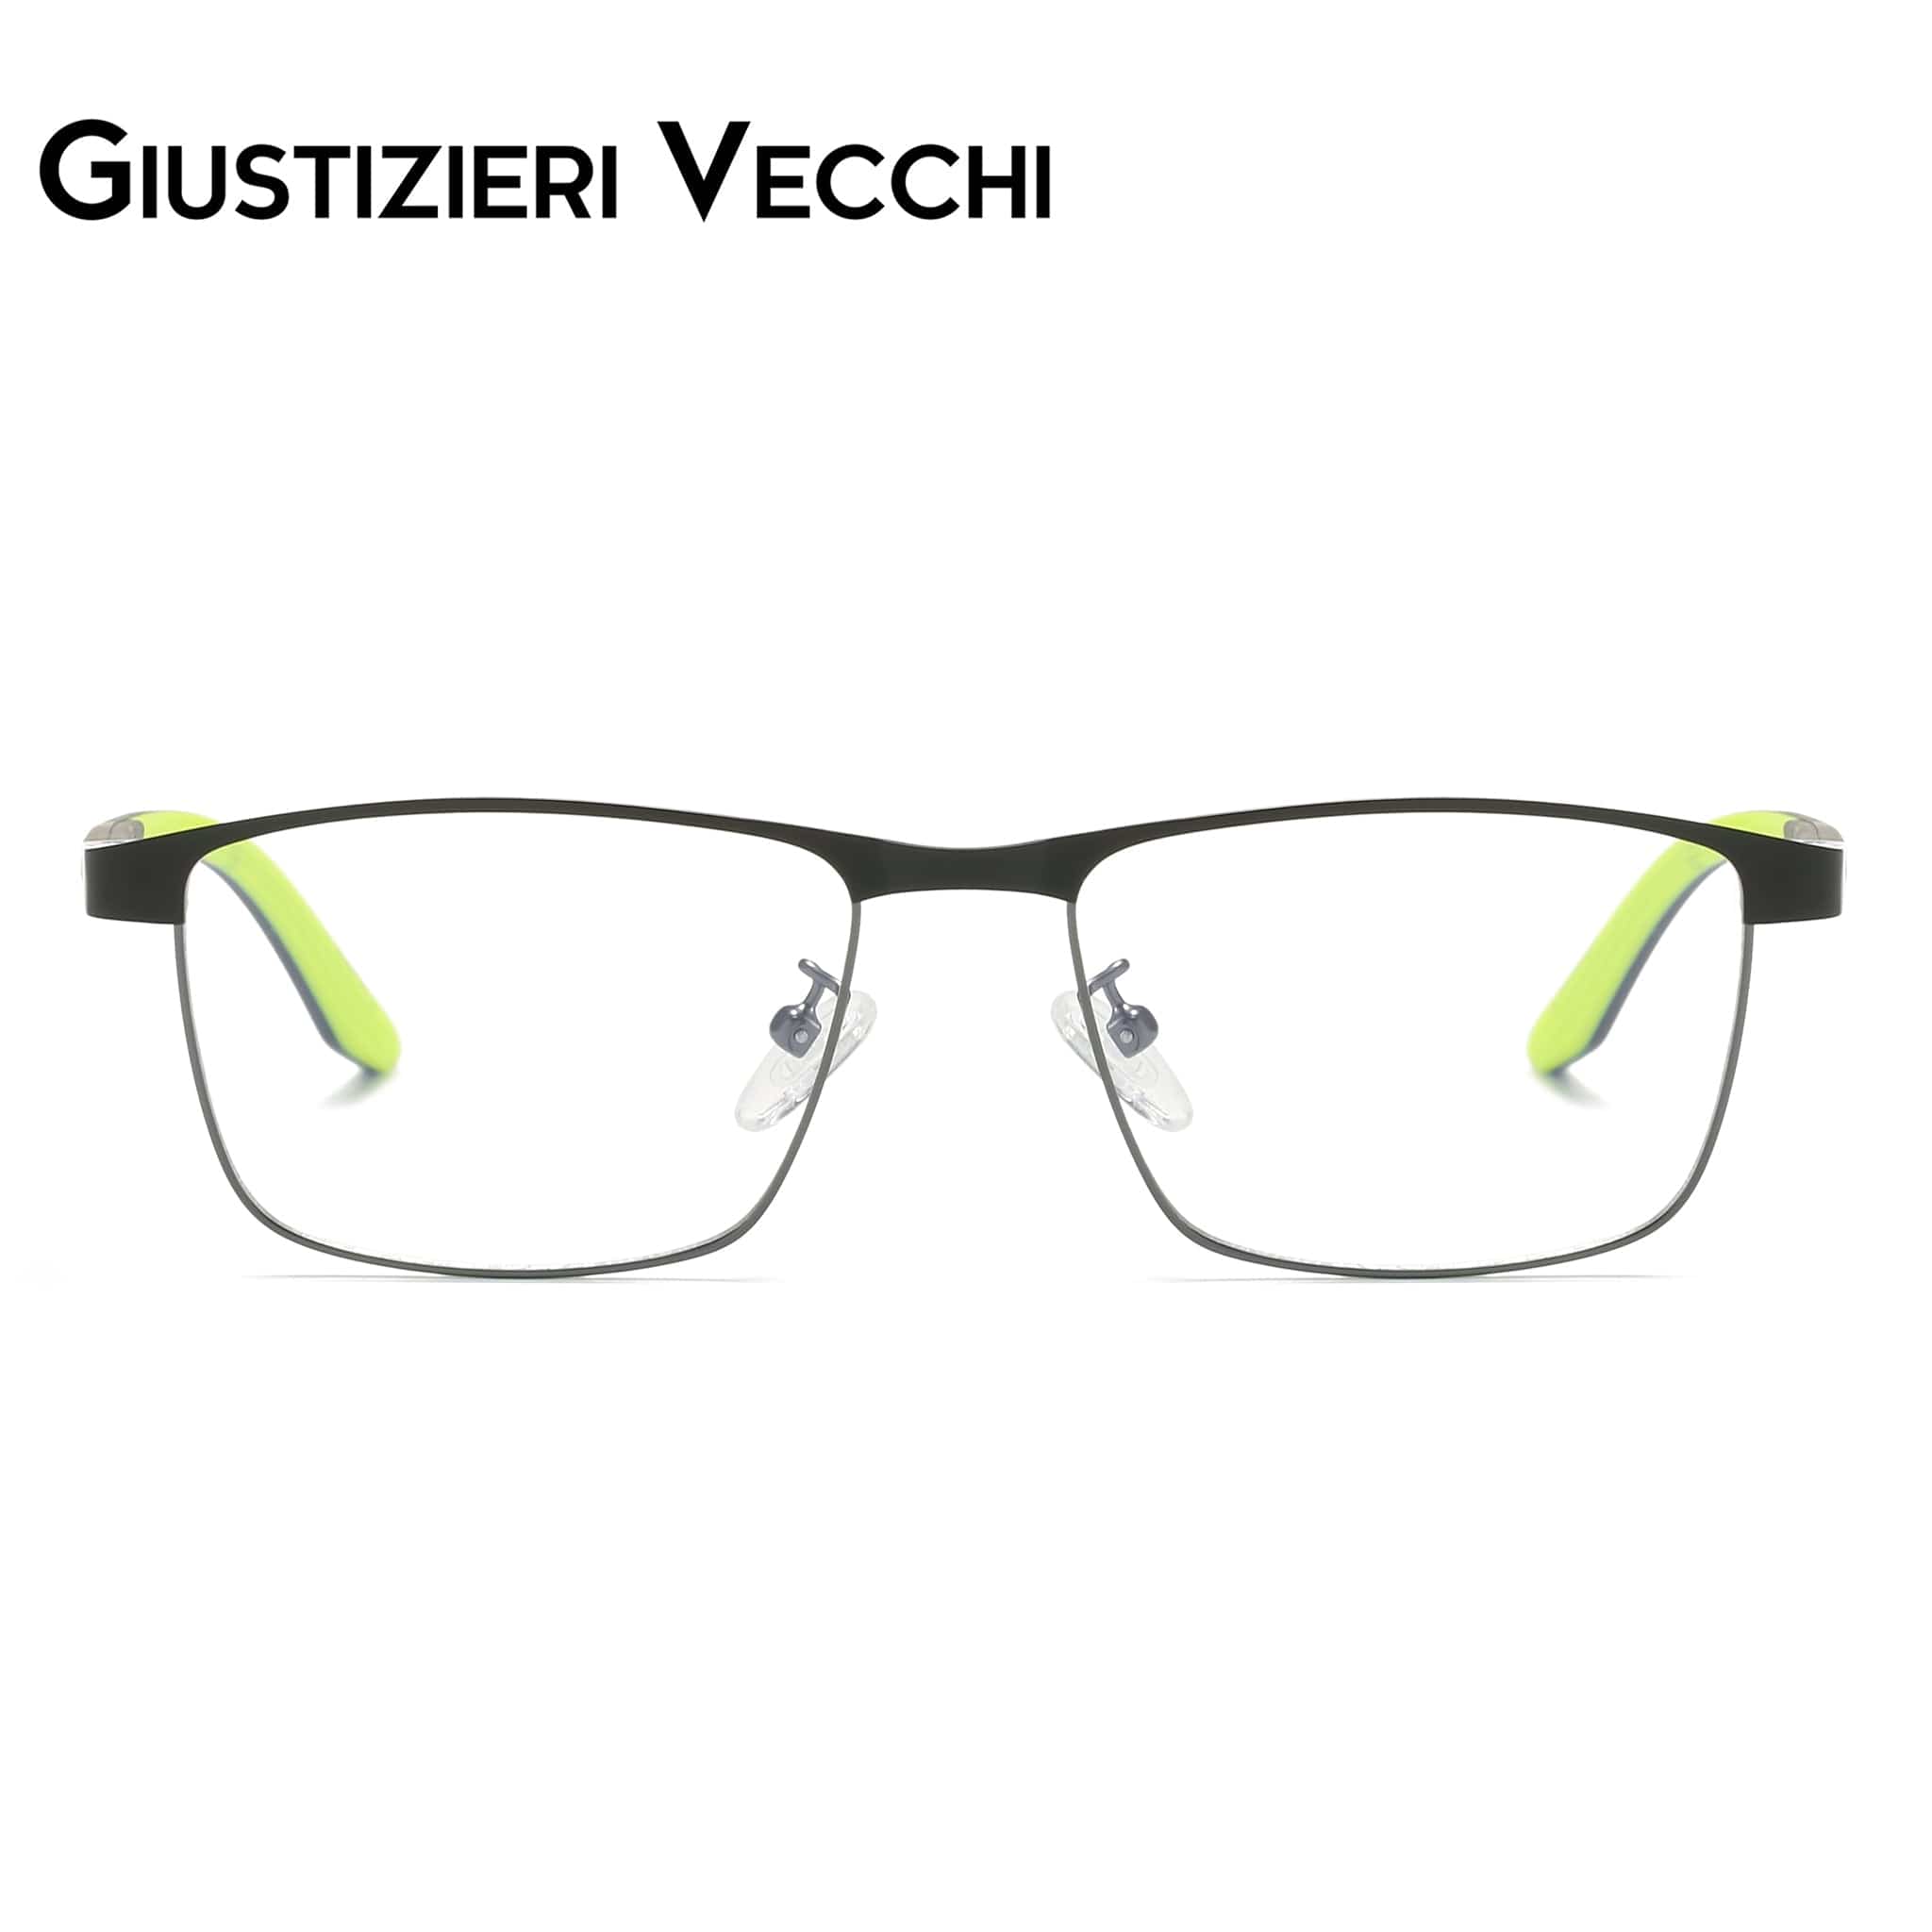 GIUSTIZIERI VECCHI Eyeglasses Black with YellowGreen / Medium Summer Breeze Uno